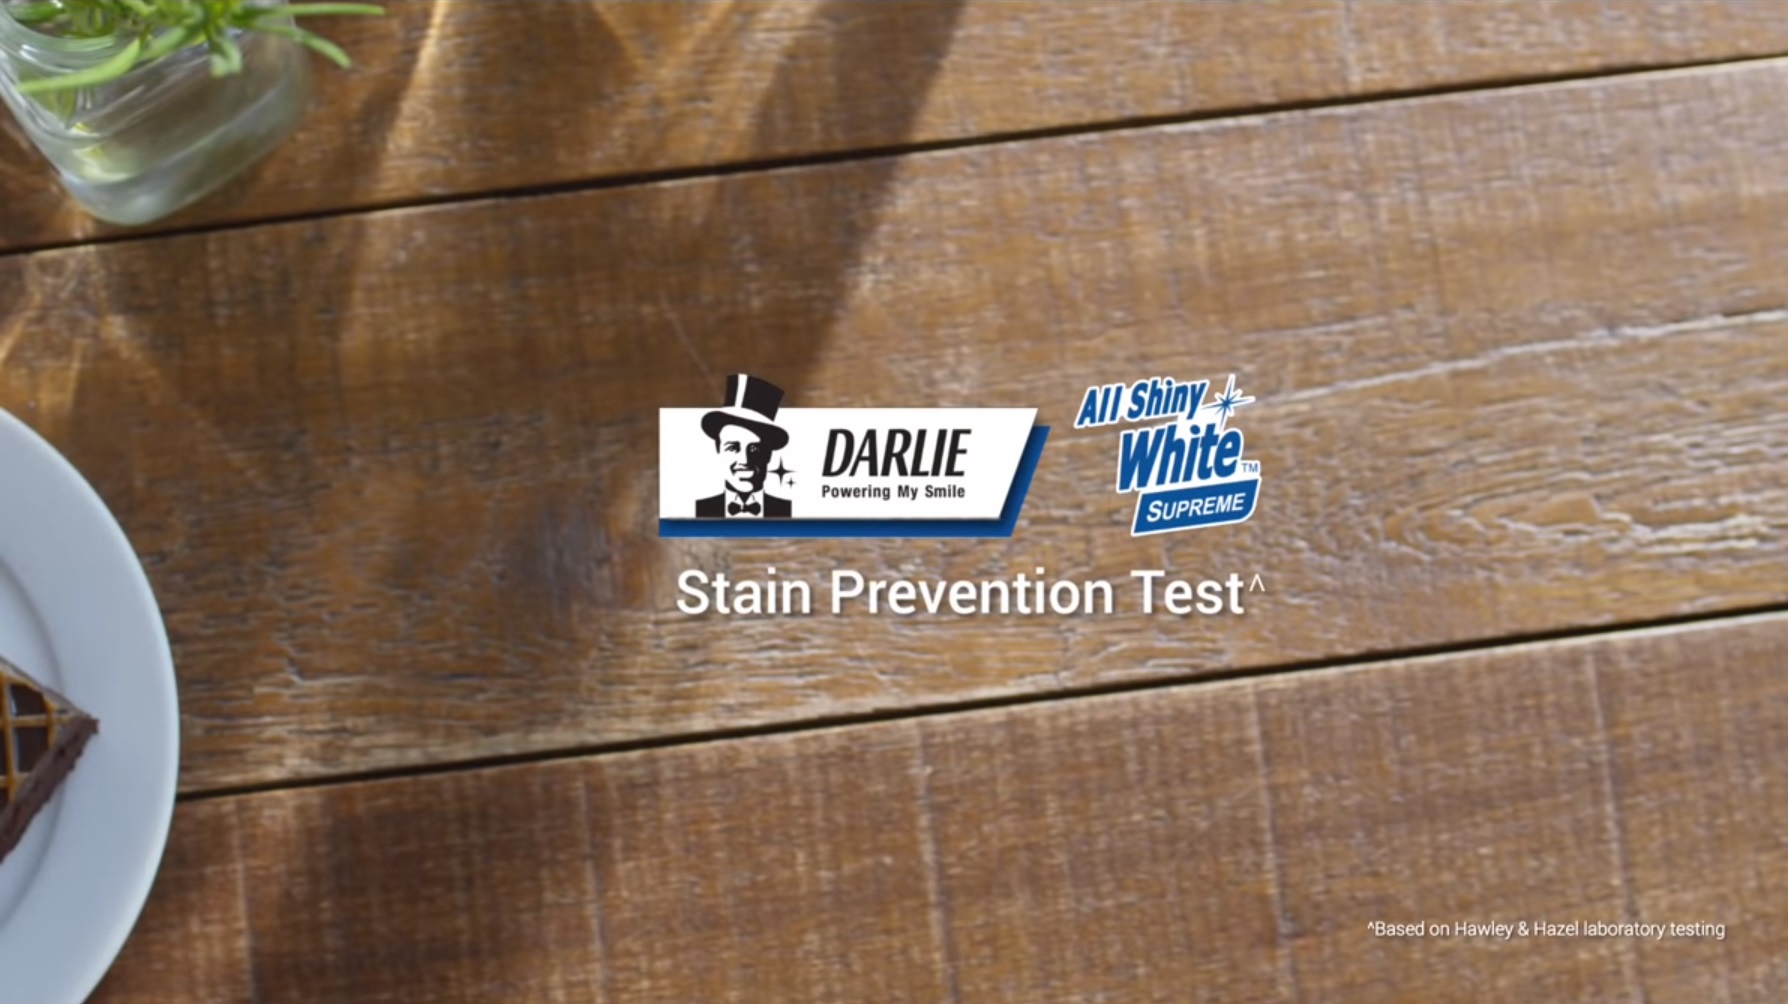 Darlie All Shiny White – A confident new brand identity